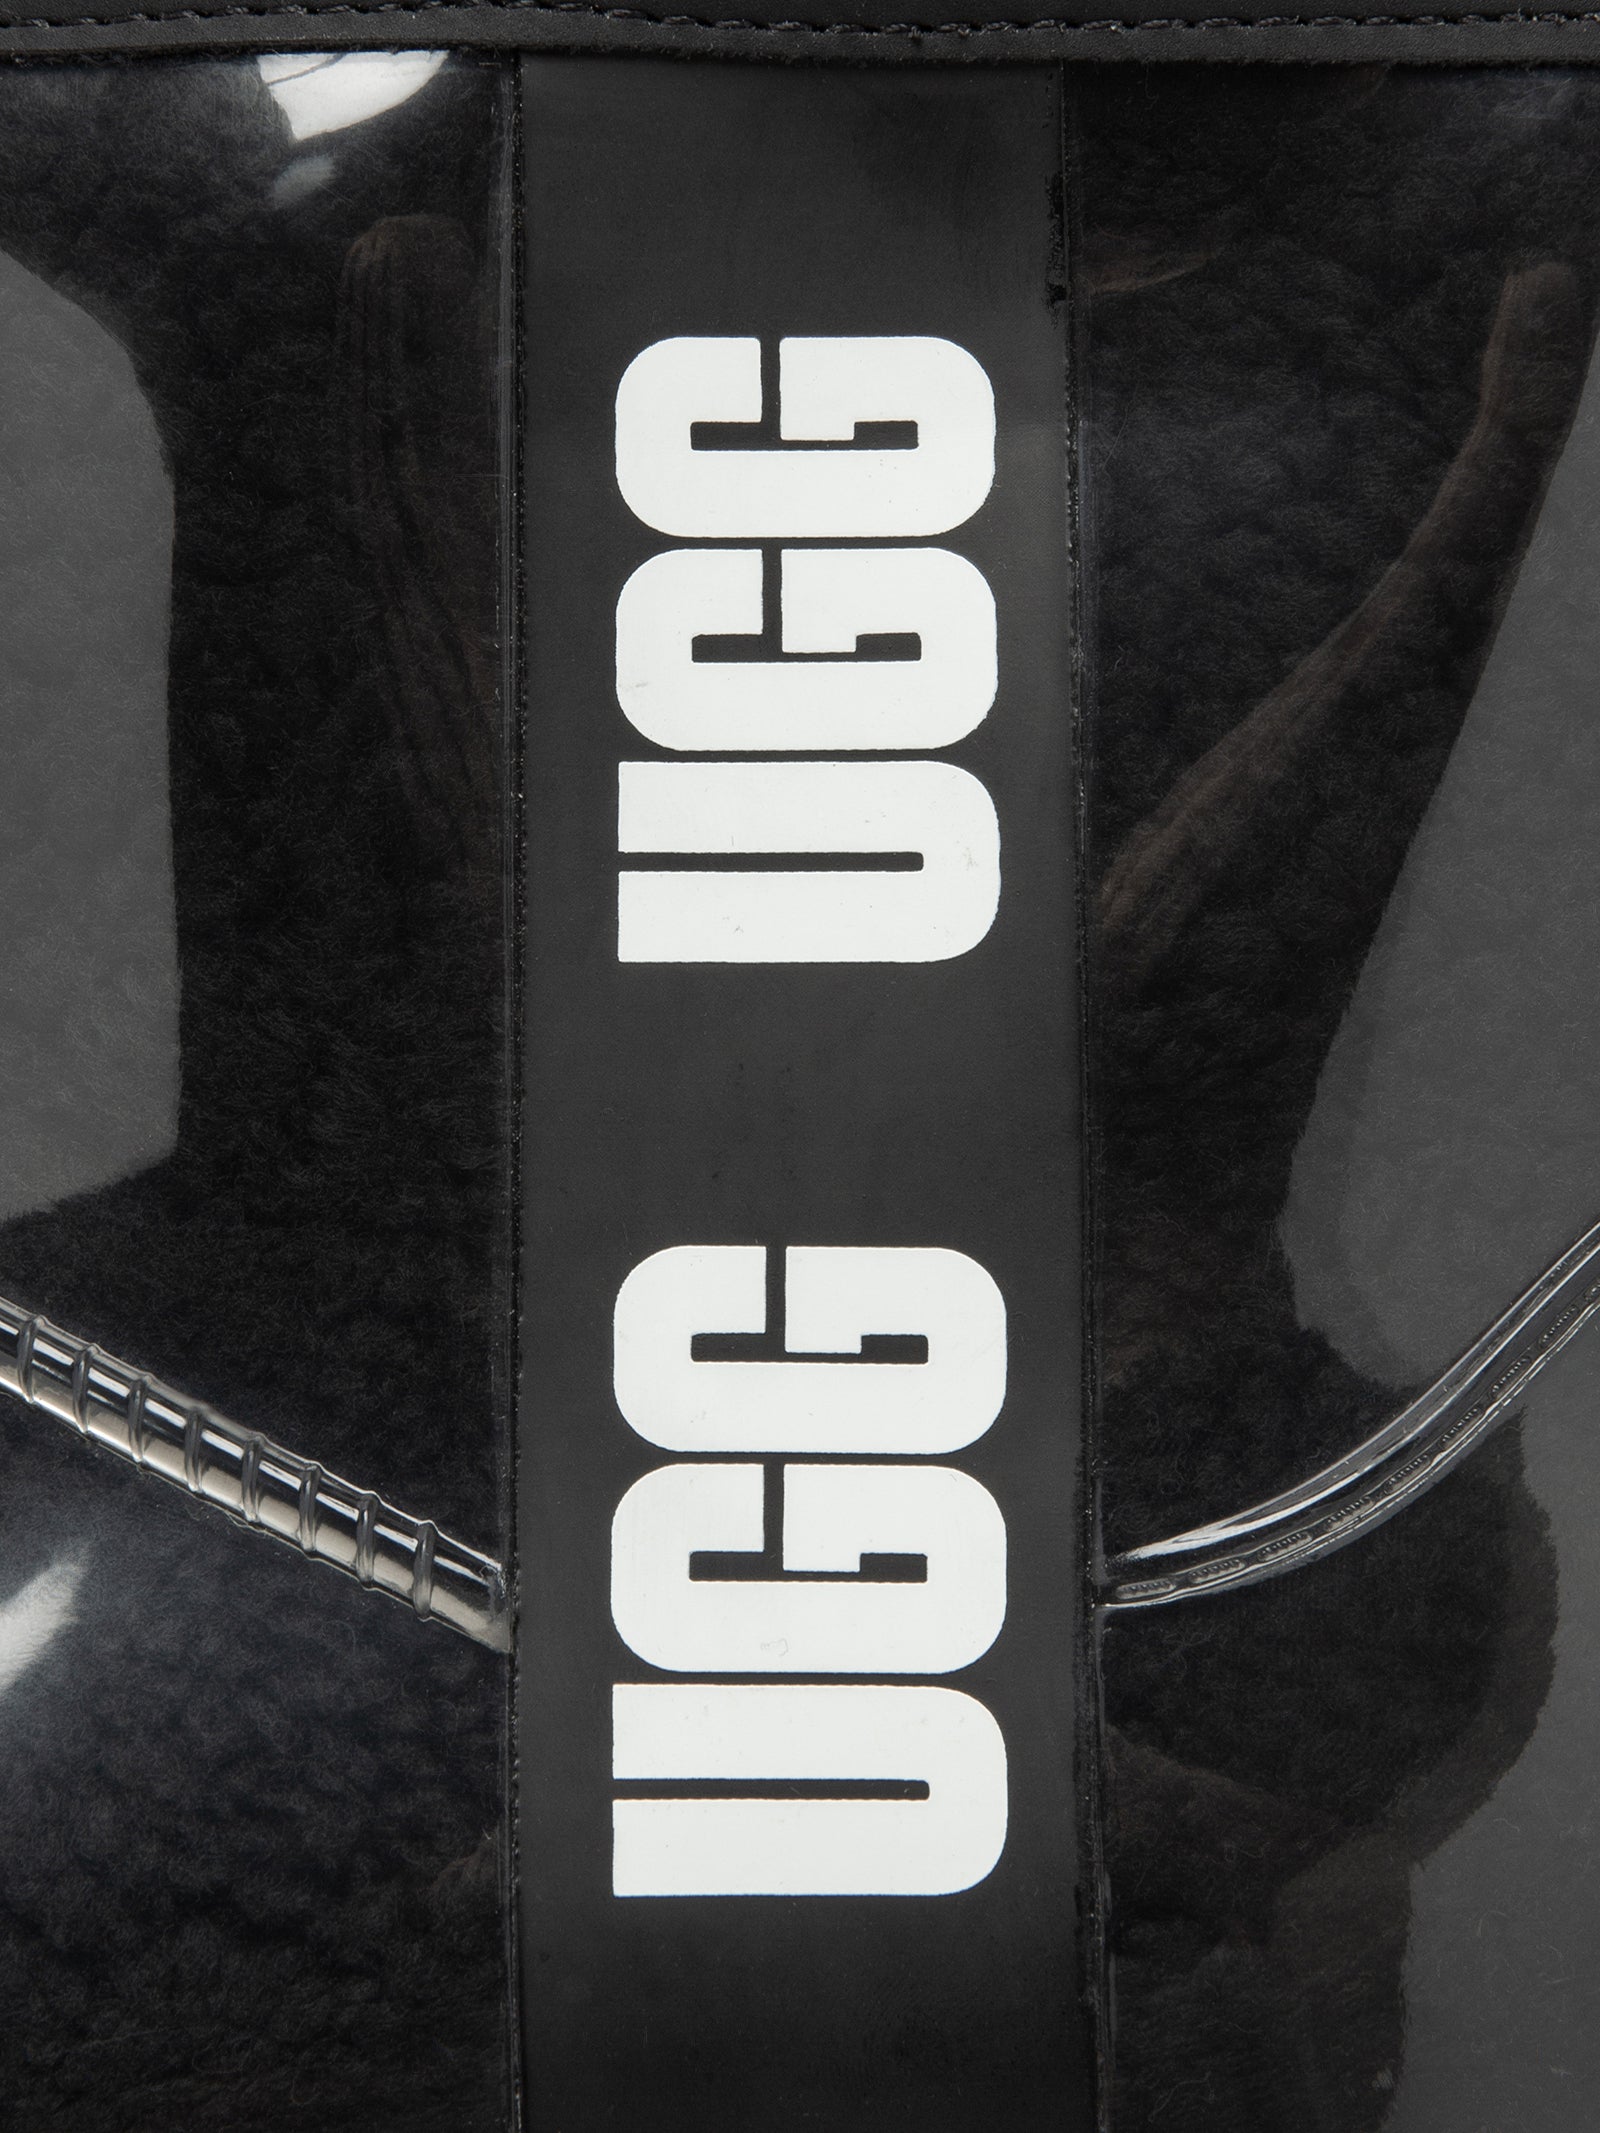 Womens Classic Clear Mini Boots in Black